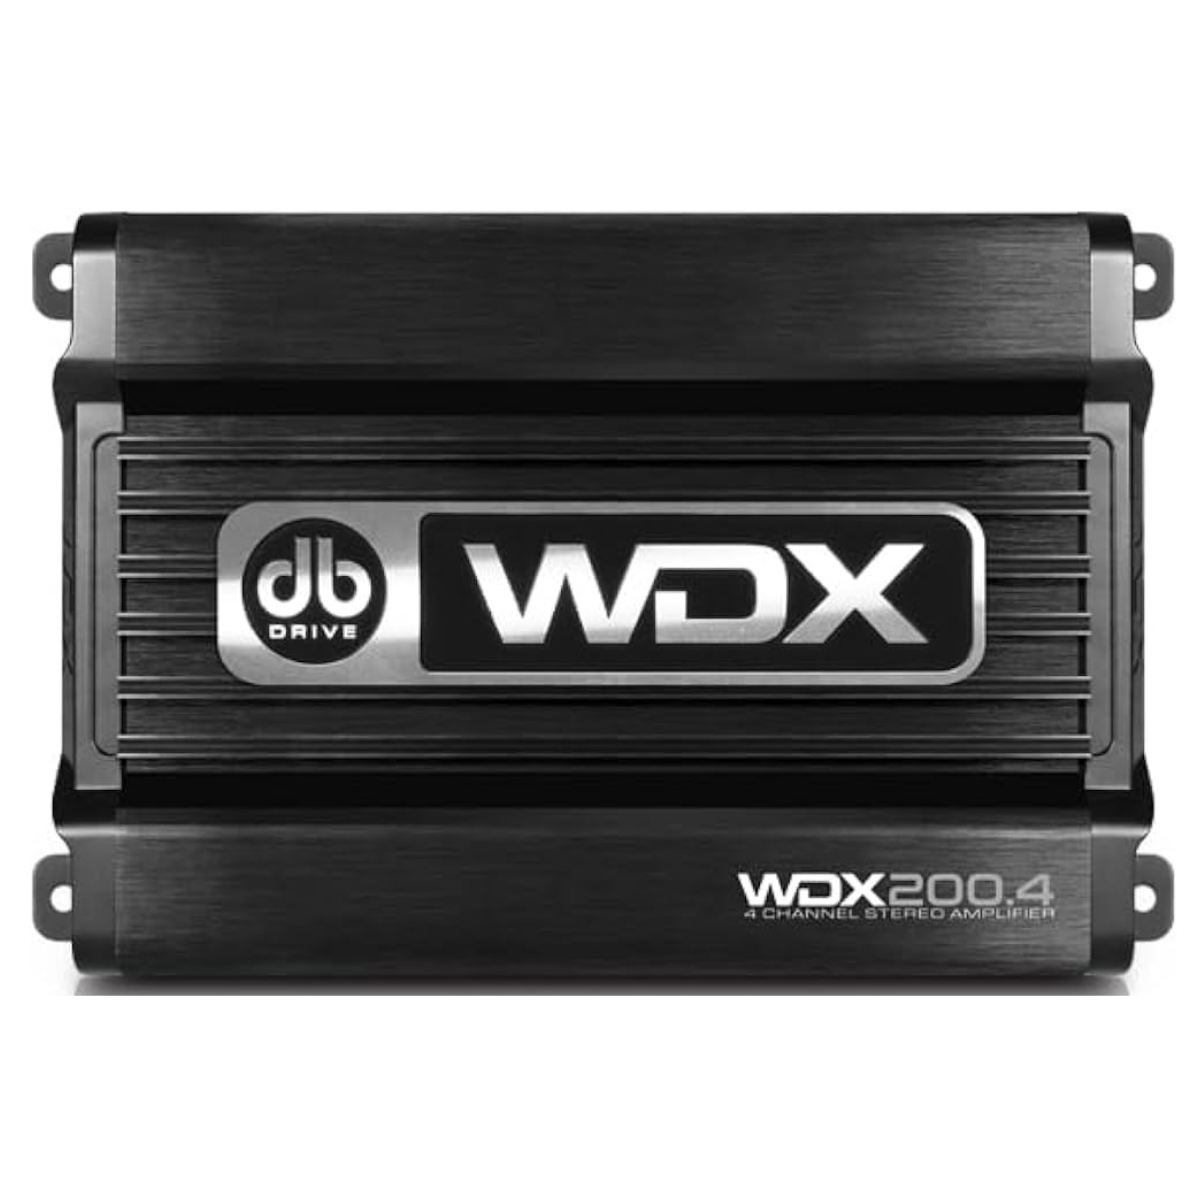 DB Drive WDX200.4